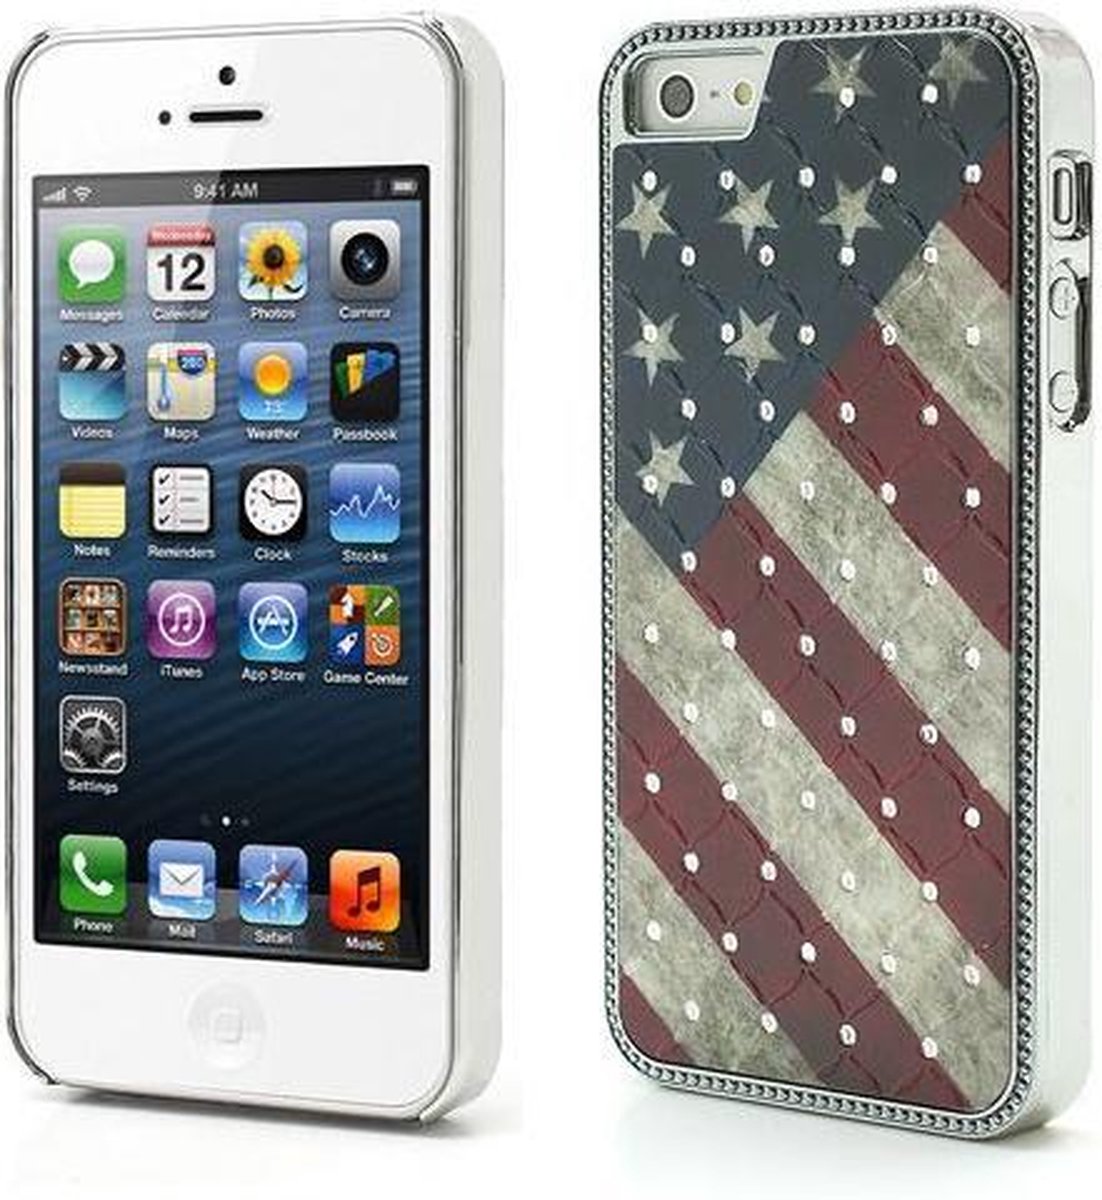 Amerikaanse vlag hardcase Iphone 5